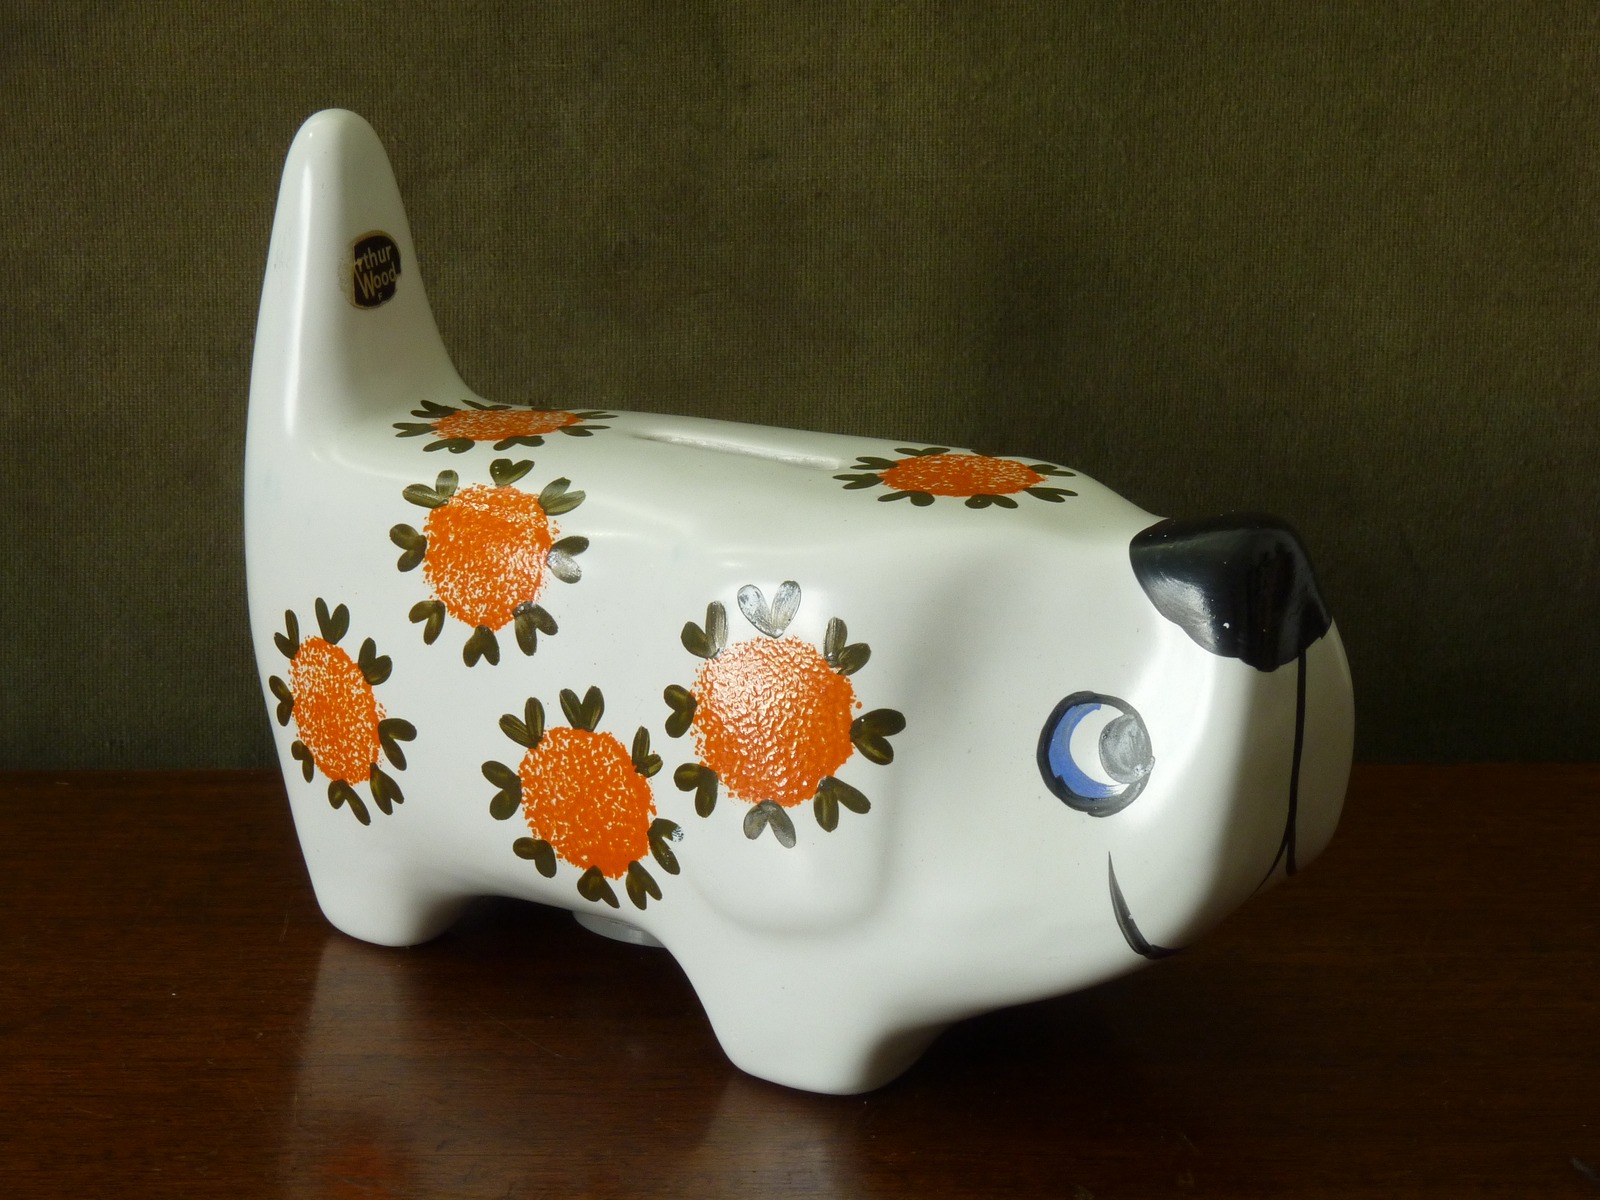 Vintage Ceramic Money Box Shaped like a Cute little Dog